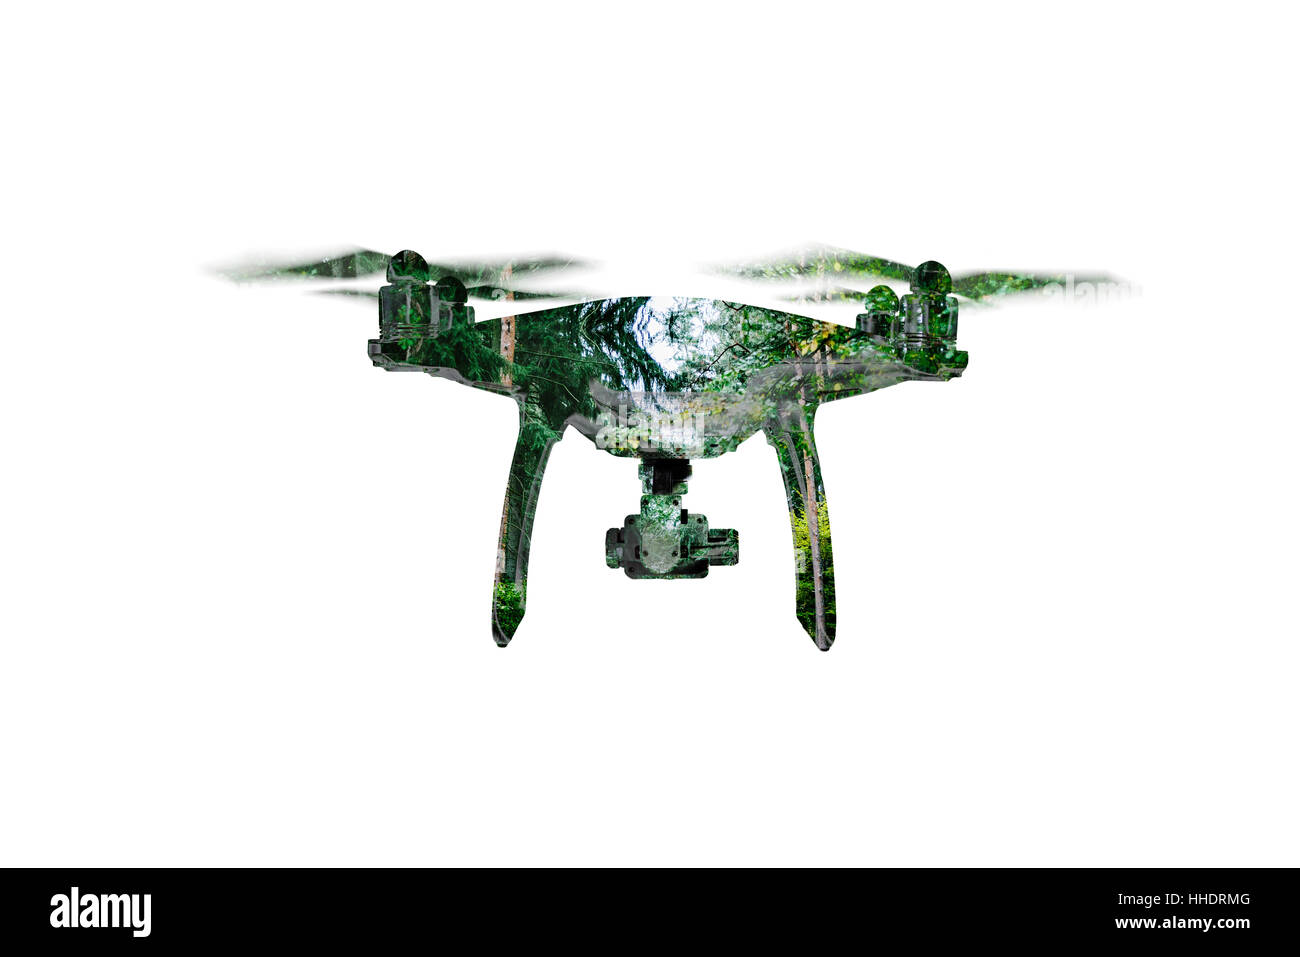 Doble exposición. Flotando drone tomando fotografías de árboles verdes. Foto de stock